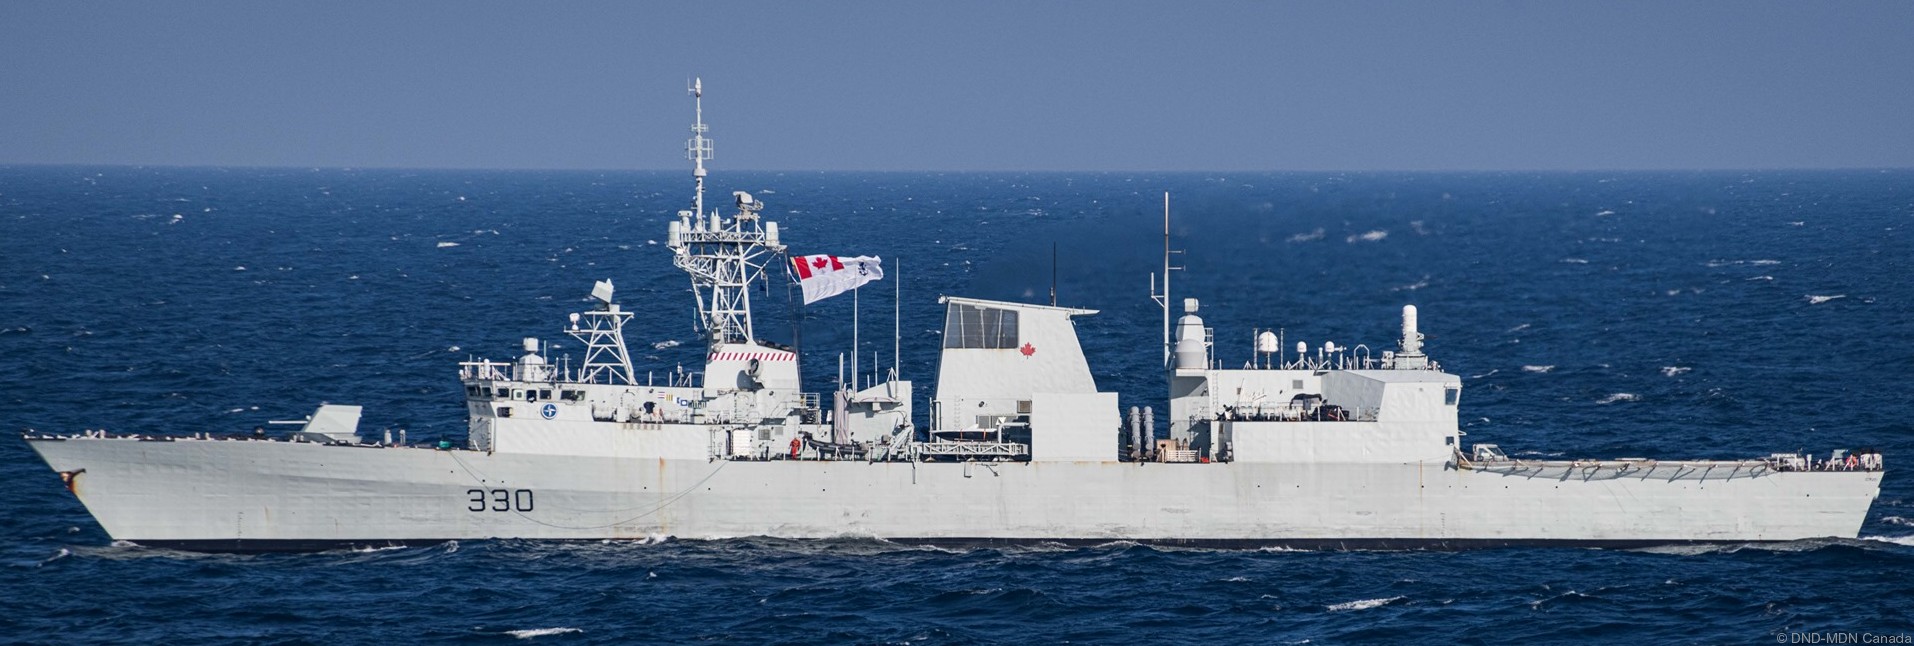 ffh-330 hmcs halifax class helicopter patrol frigate royal canadian navy rcn ncsm marine royale canadienne 19